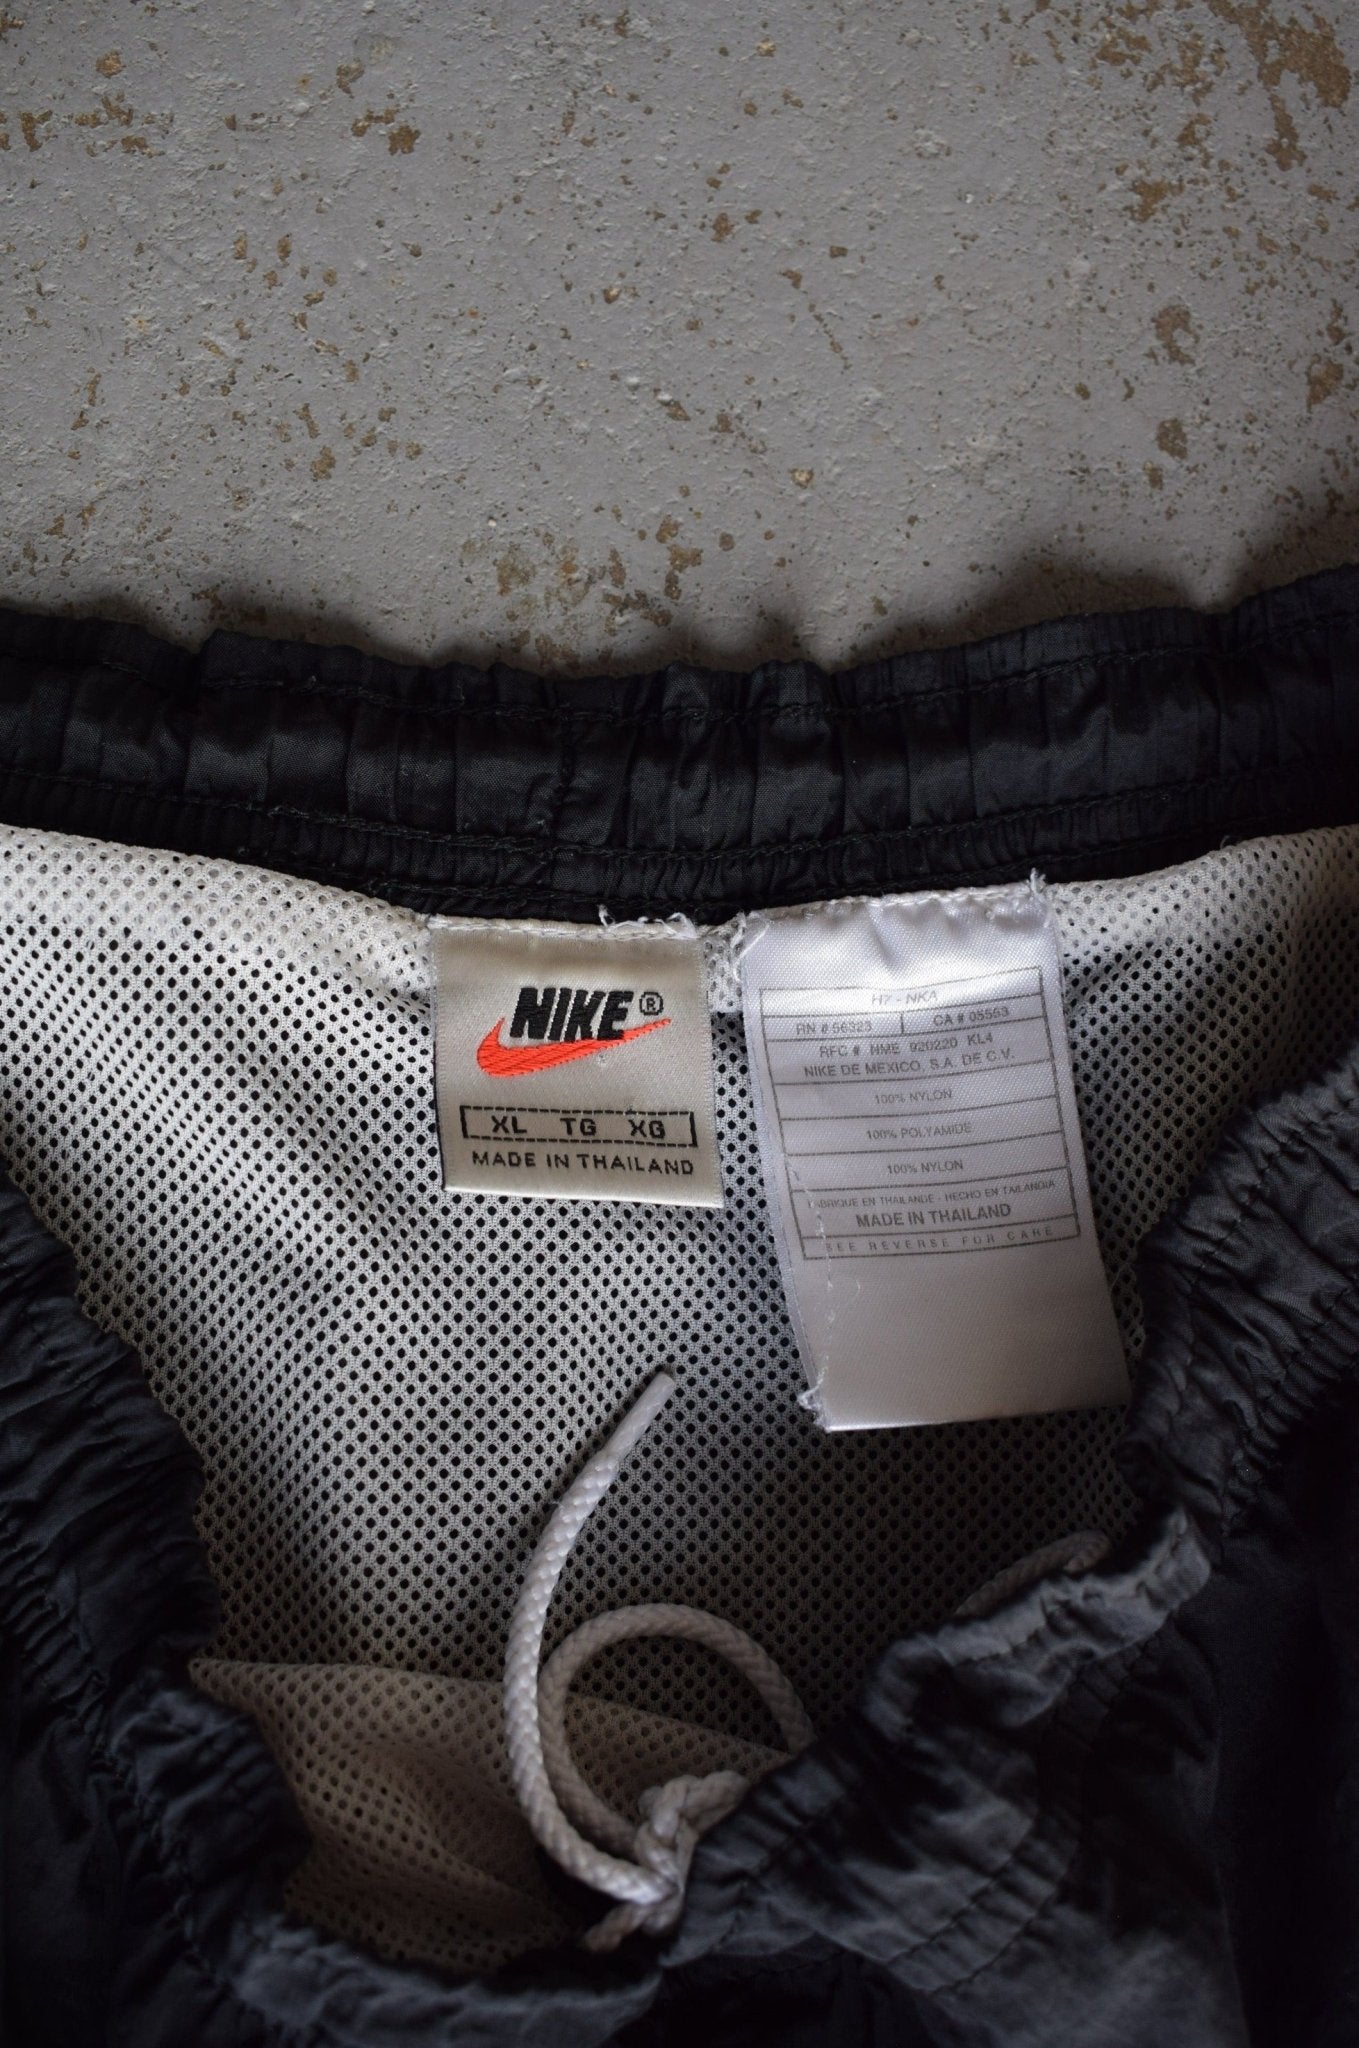 Vintage 90s Nike Shorts (XL) - Retrospective Store